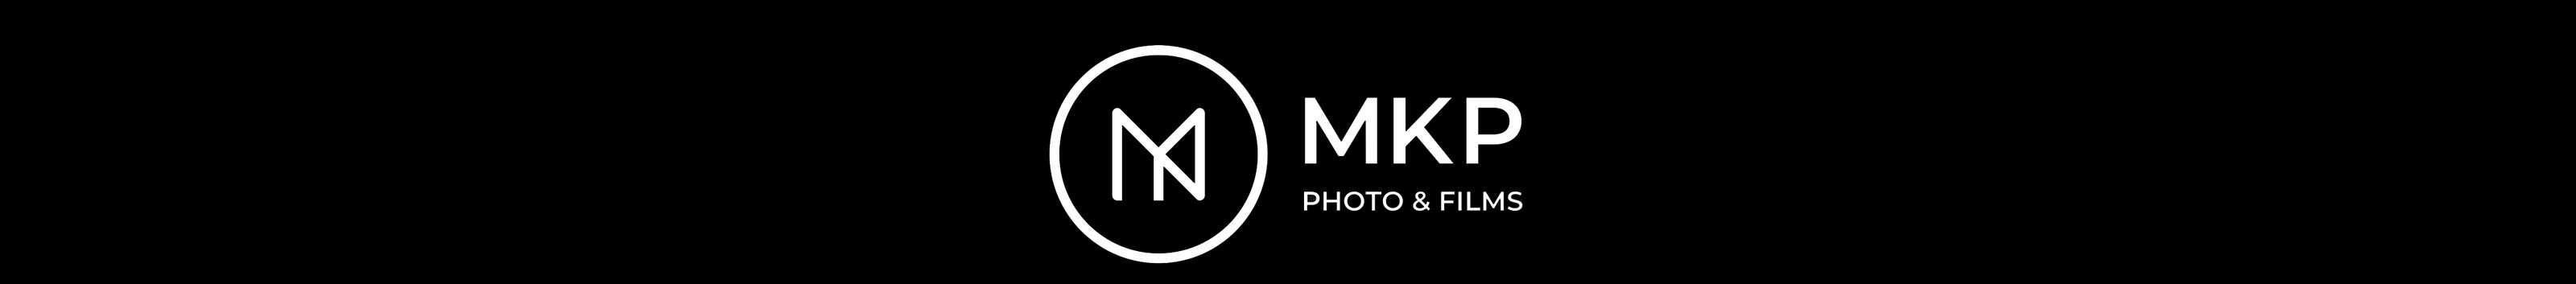 Profielbanner van MKP Photo & Films